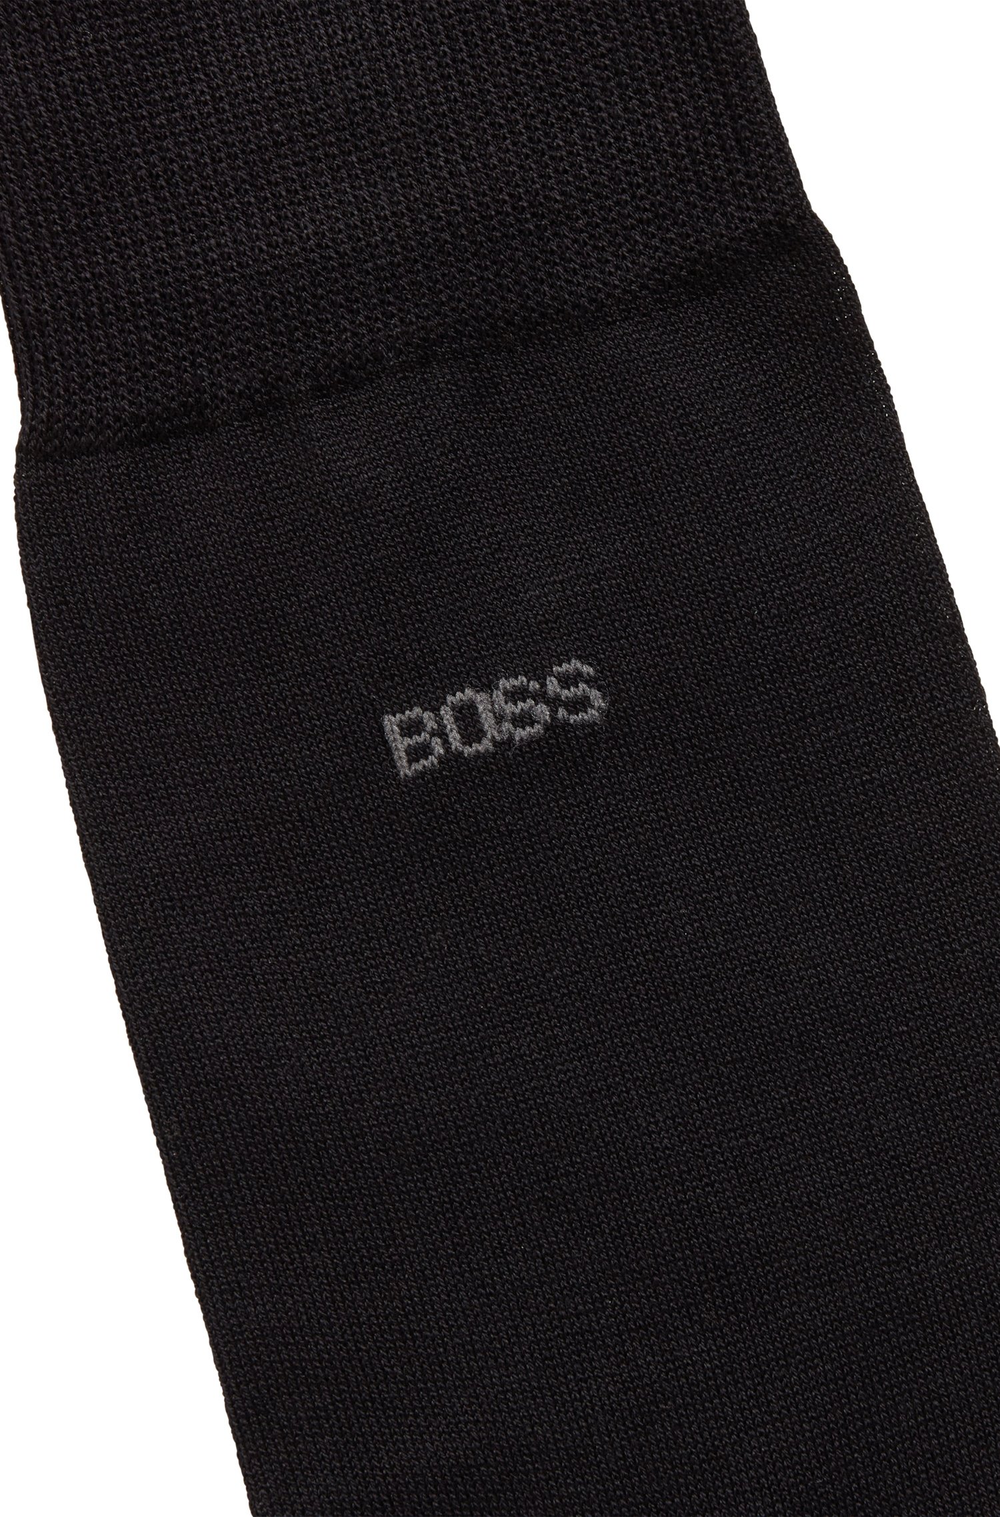 BOSS George Men's Socks